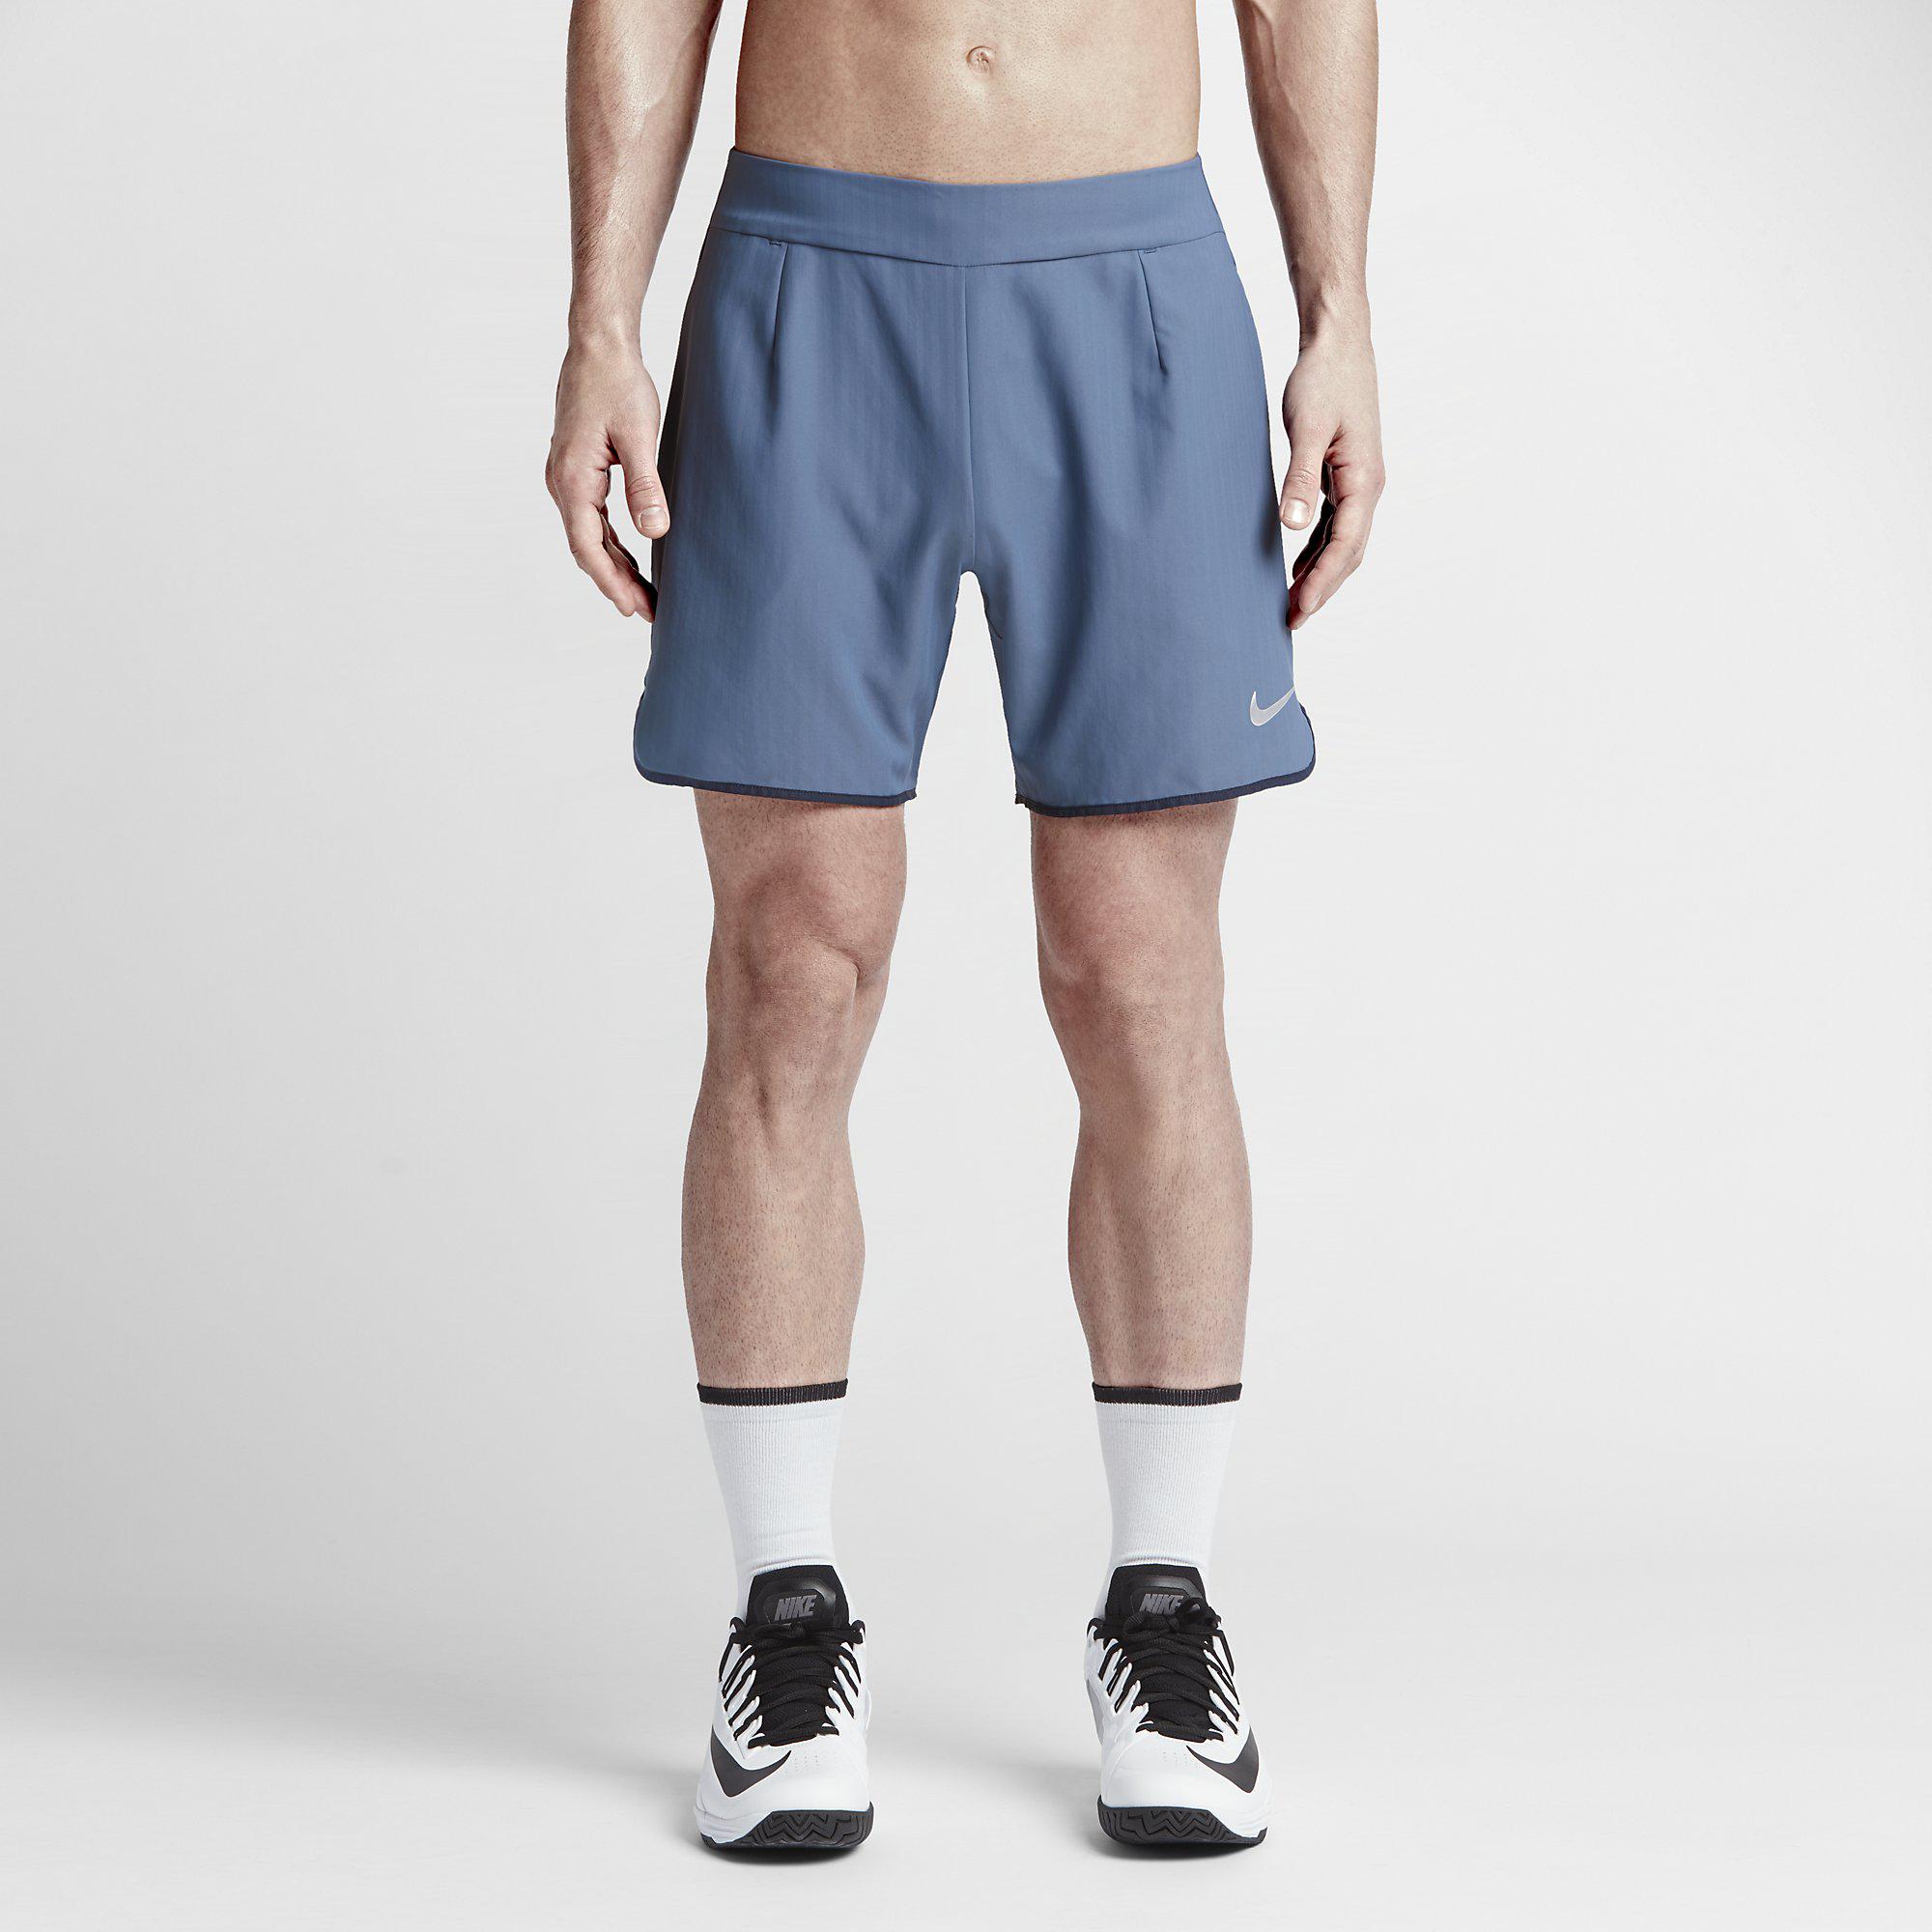 Nike Mens Premier Gladiator 7 Inch Shorts - Ocean Fog Blue - Tennisnuts.com